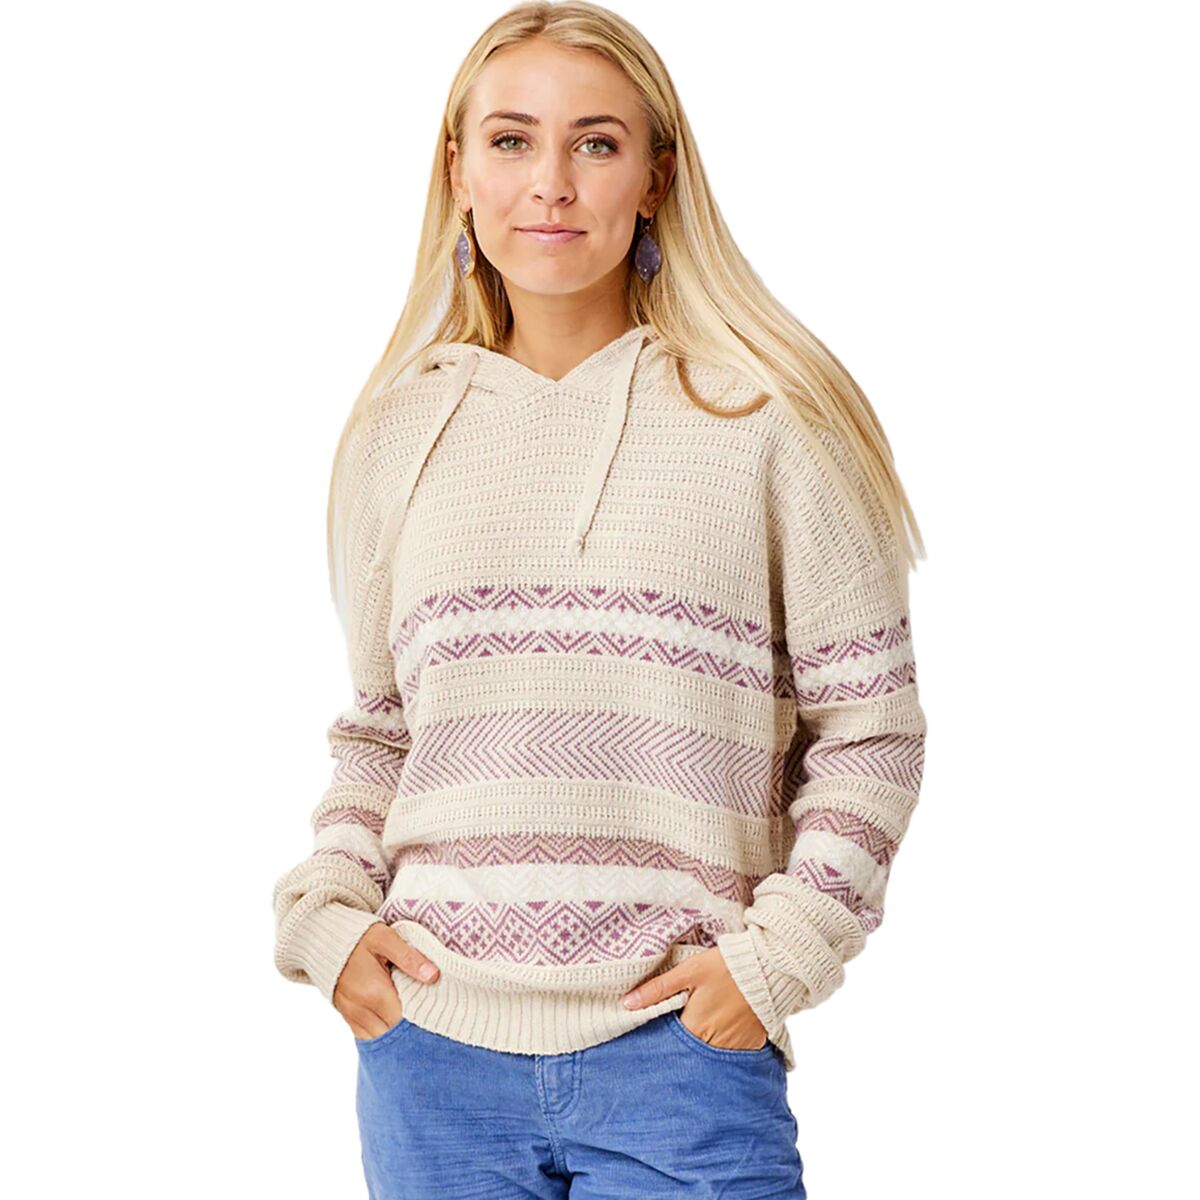 Carve Designs Stowe Hooded Fairisle Sweater - Women's